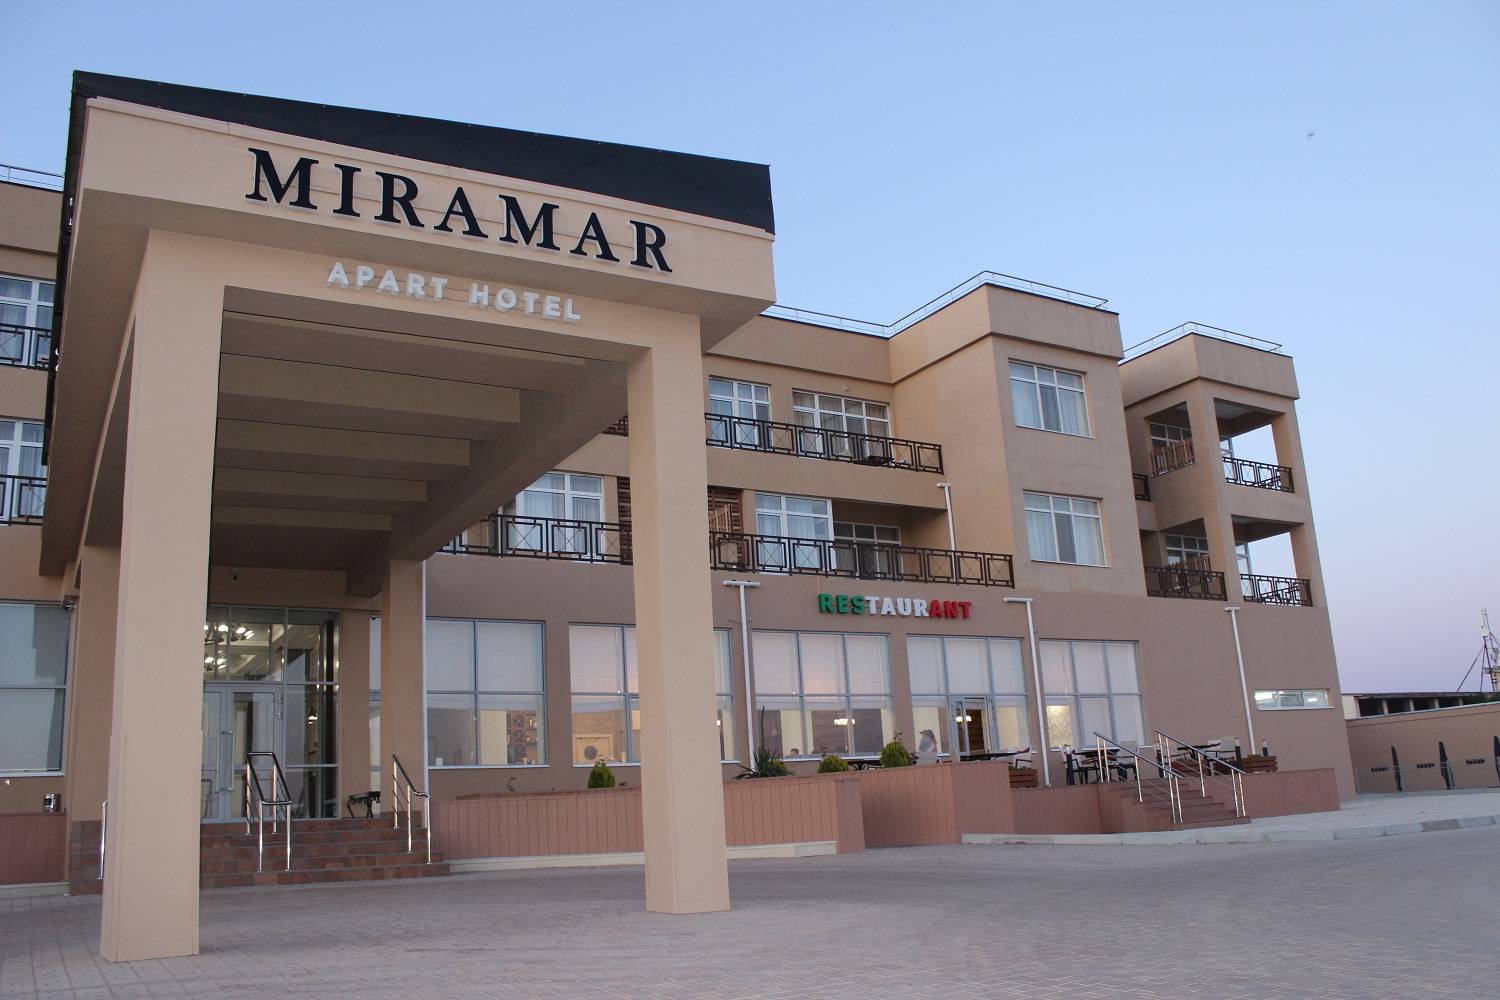 Miramar apart Hotel